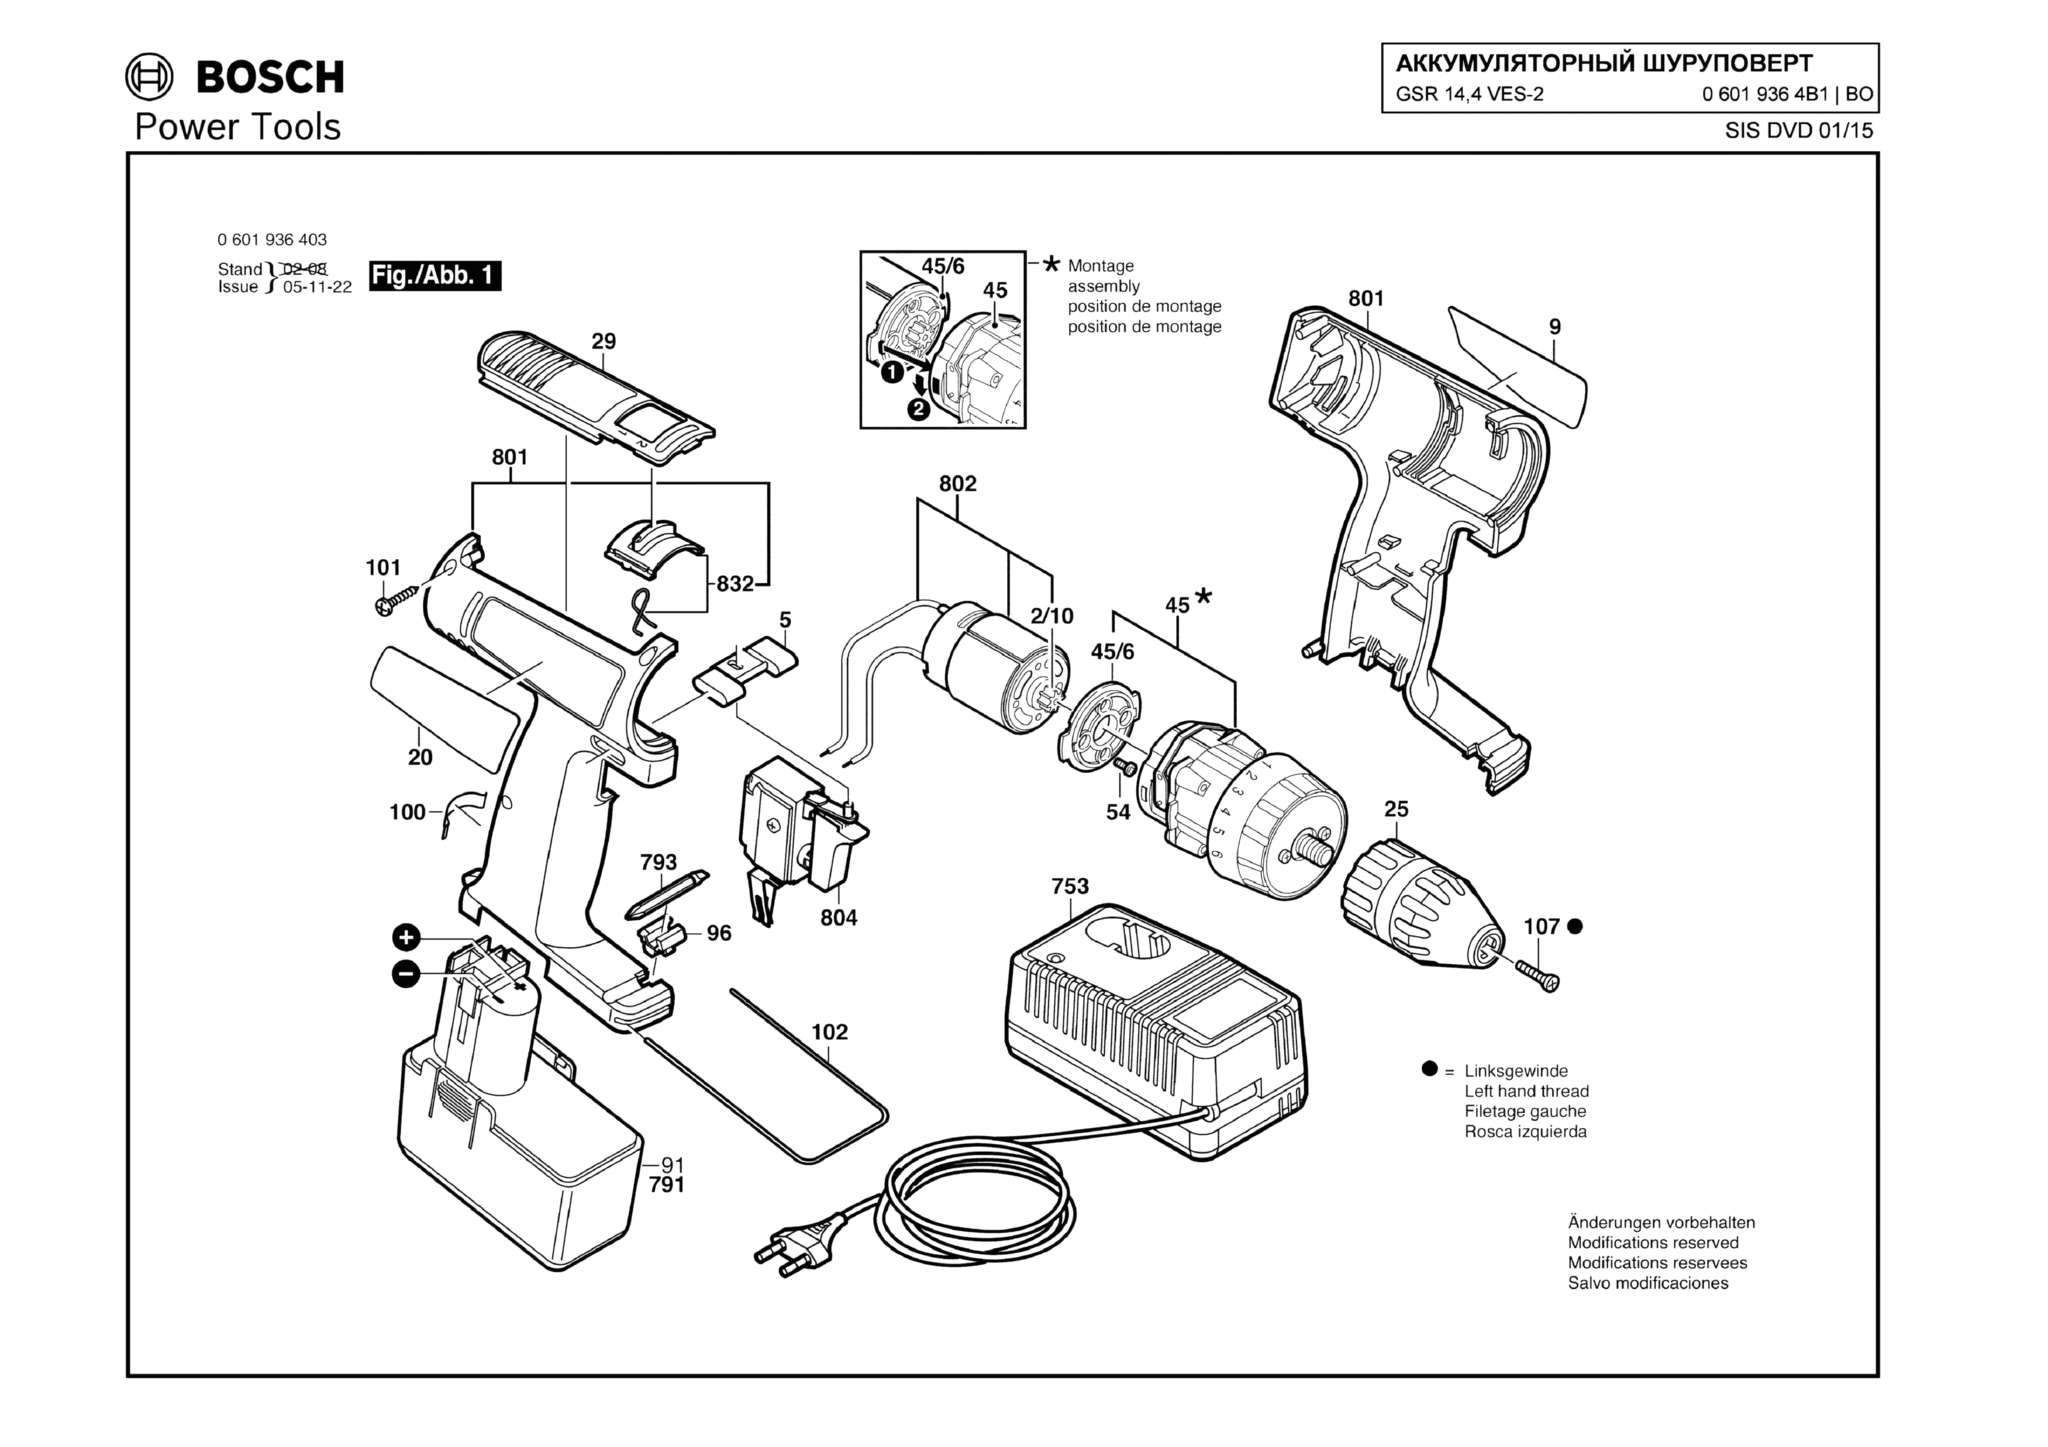 Запчасти, схема и деталировка Bosch GSR 14,4 VES-2 (ТИП 06019364B1)